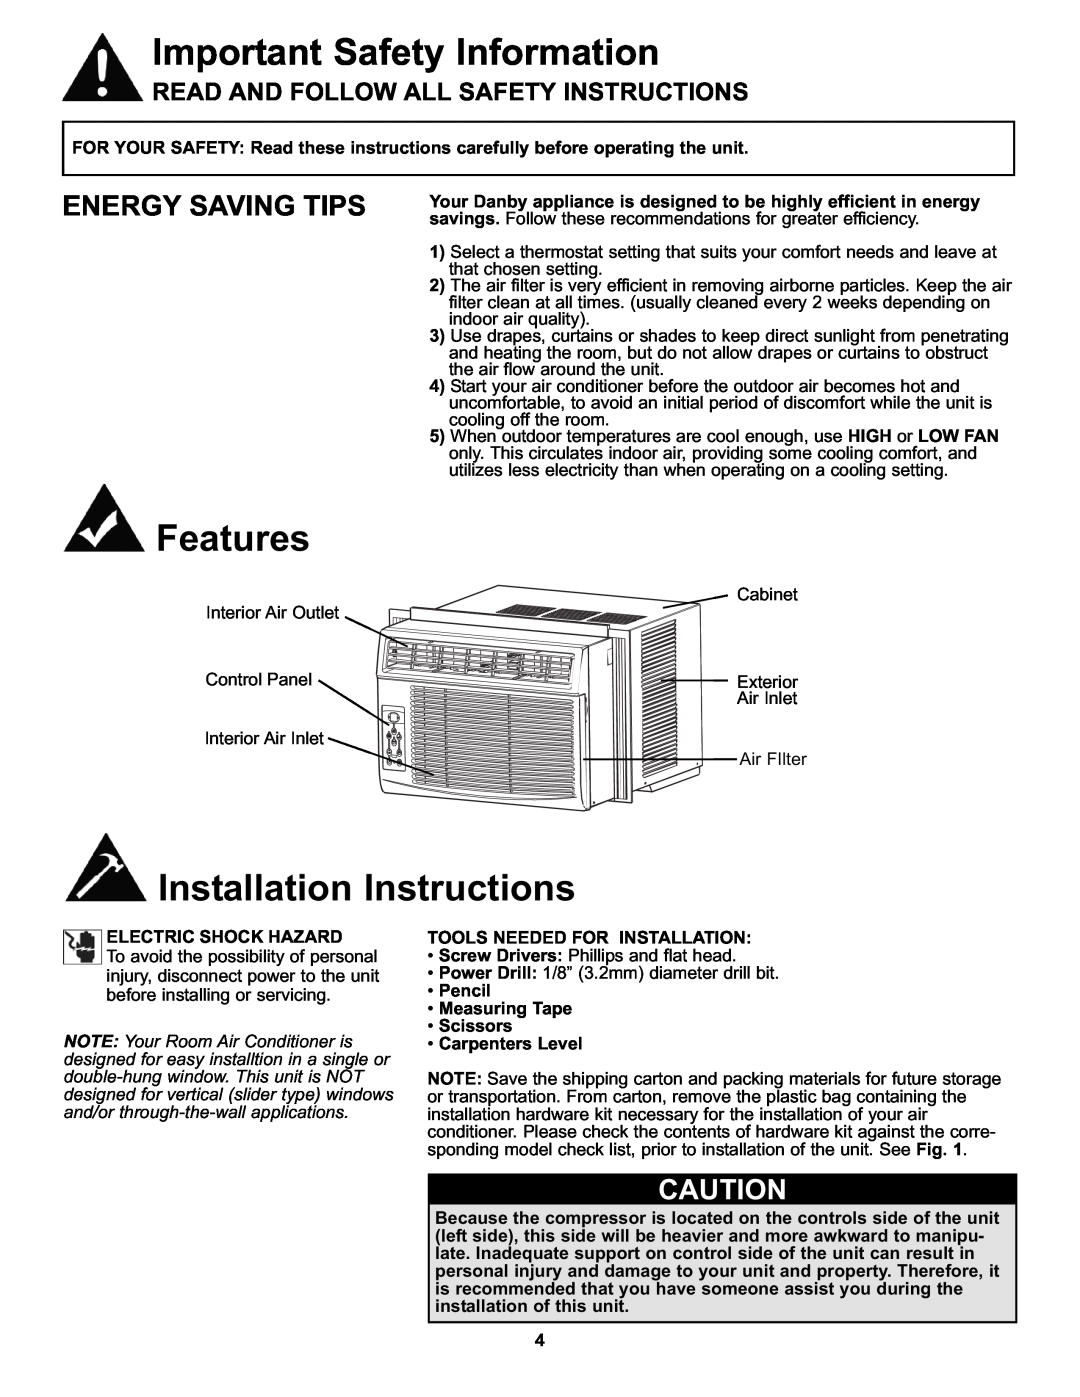 Danby DAC8011E, DAC8010E Features, Installation Instructions, Energy Saving Tips, Electric Shock Hazard, Carpenters Level 